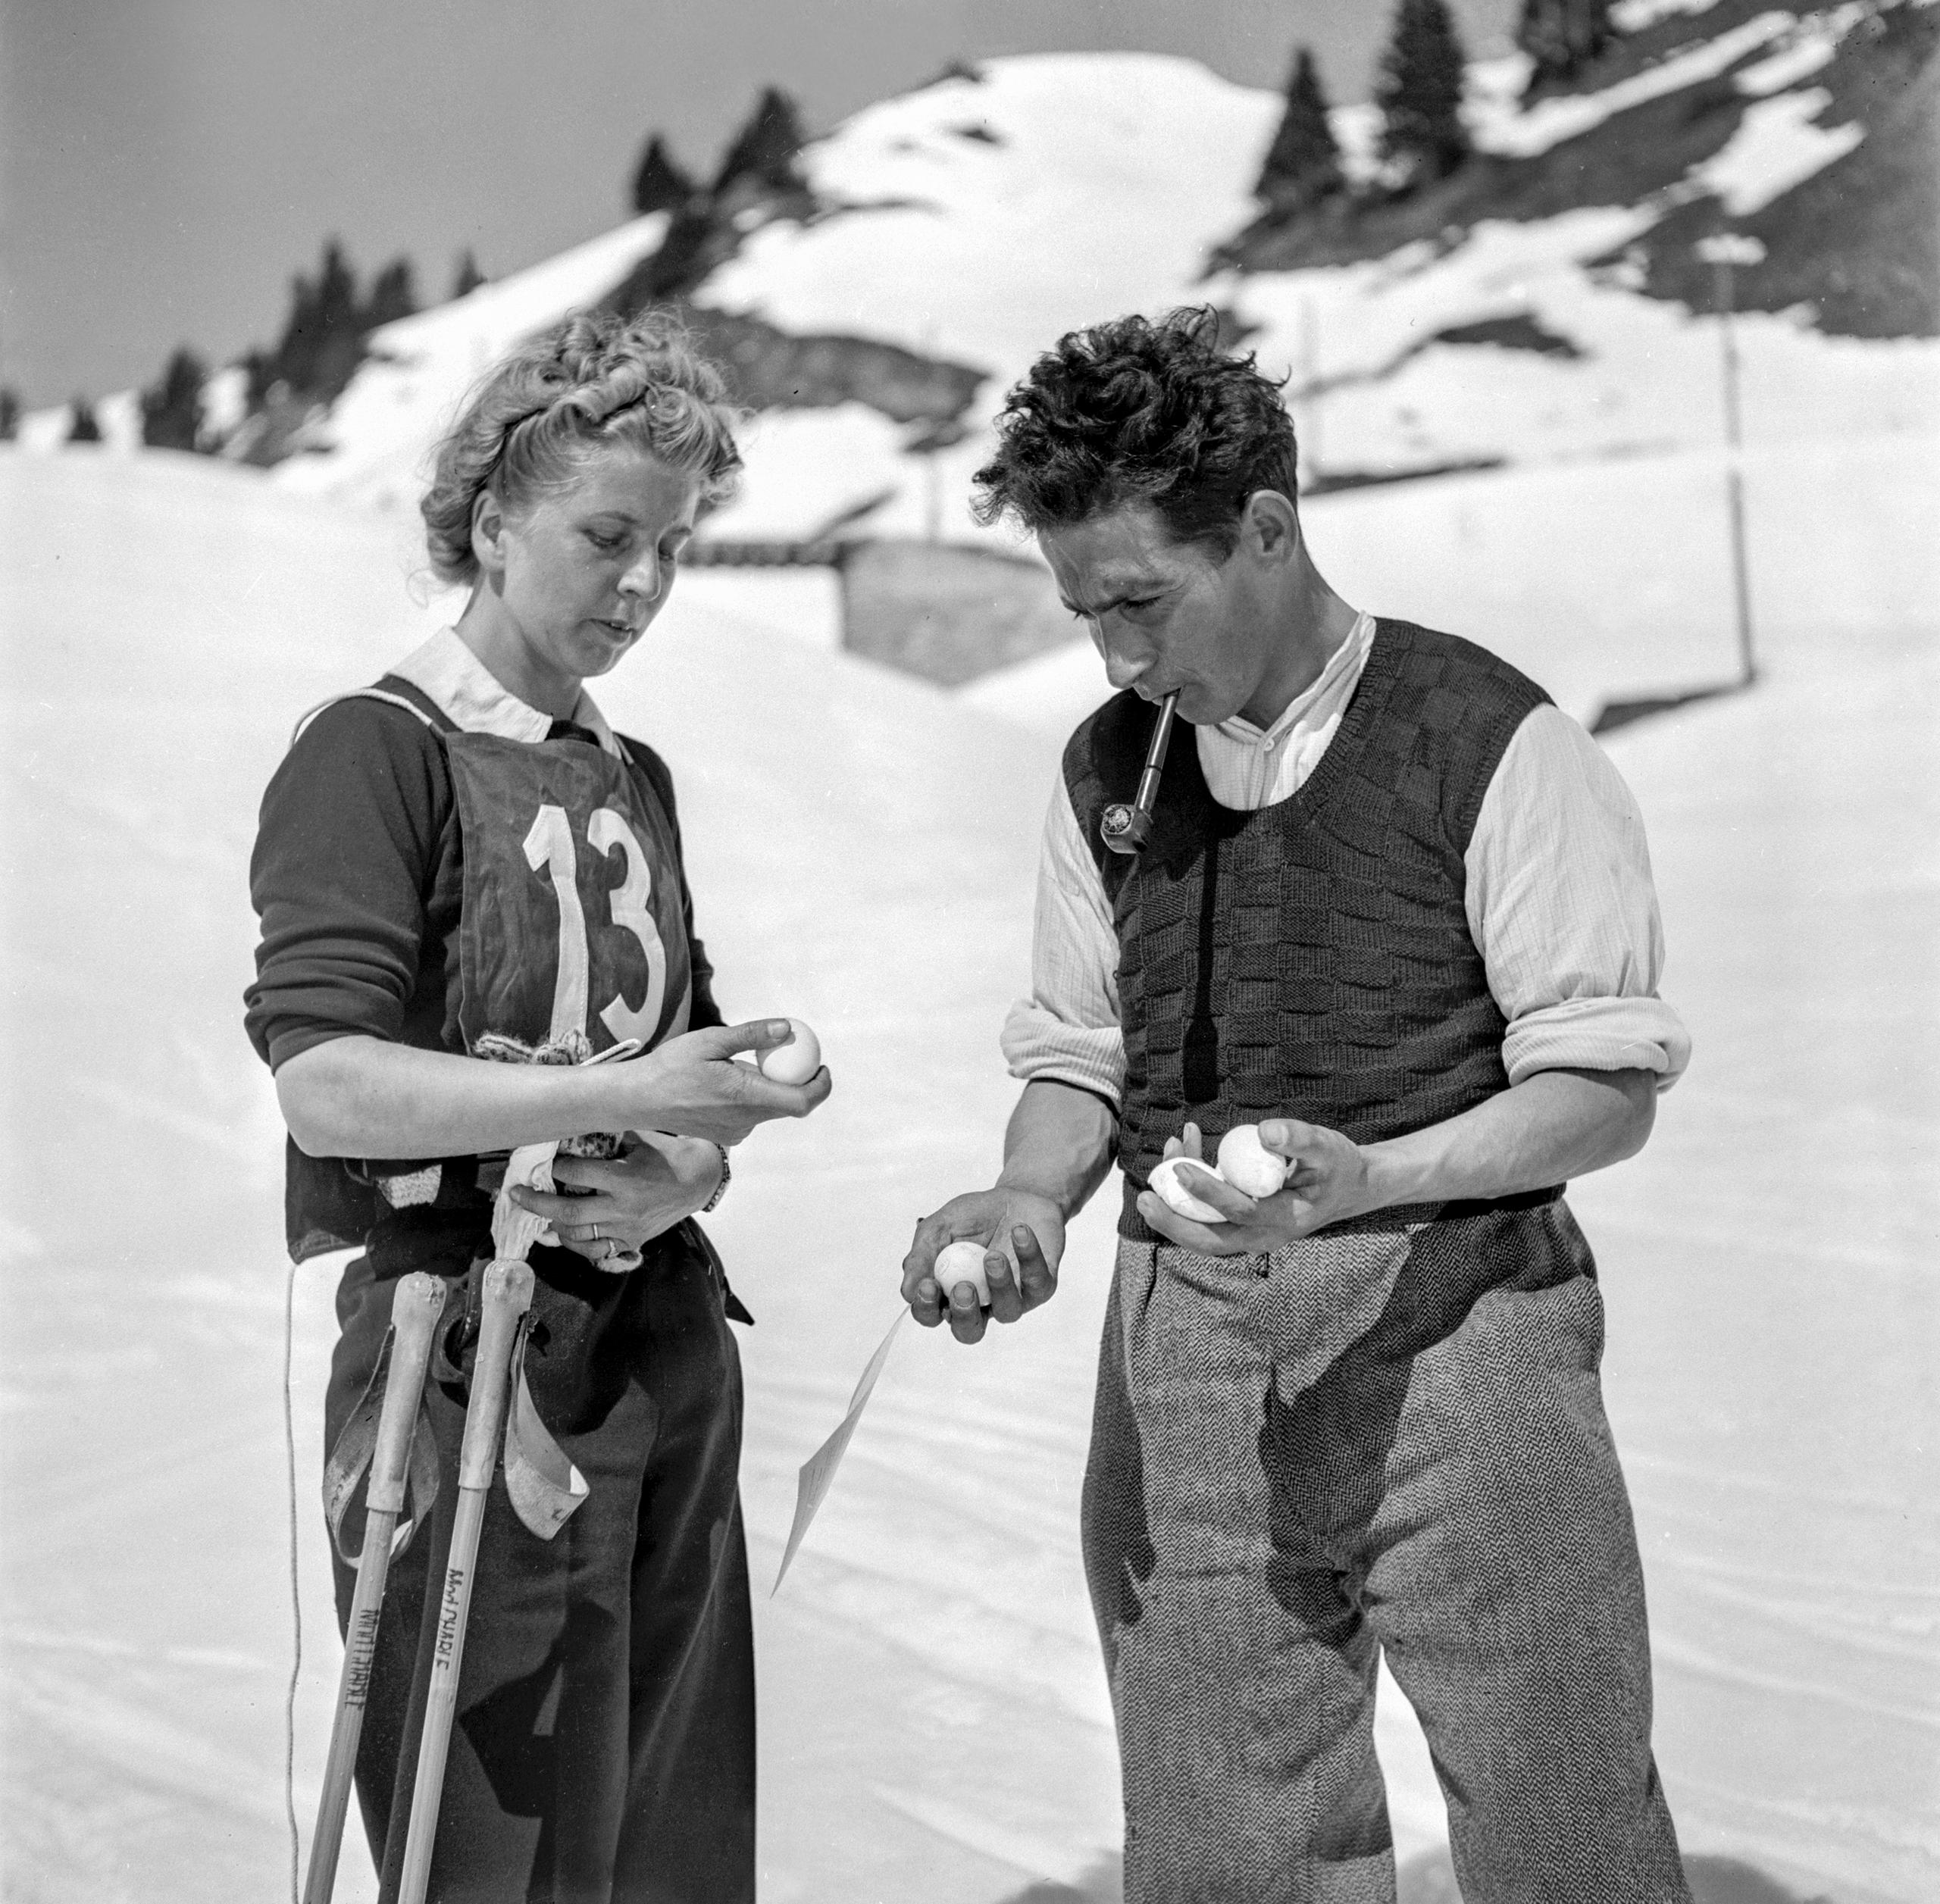 Vintage skier image